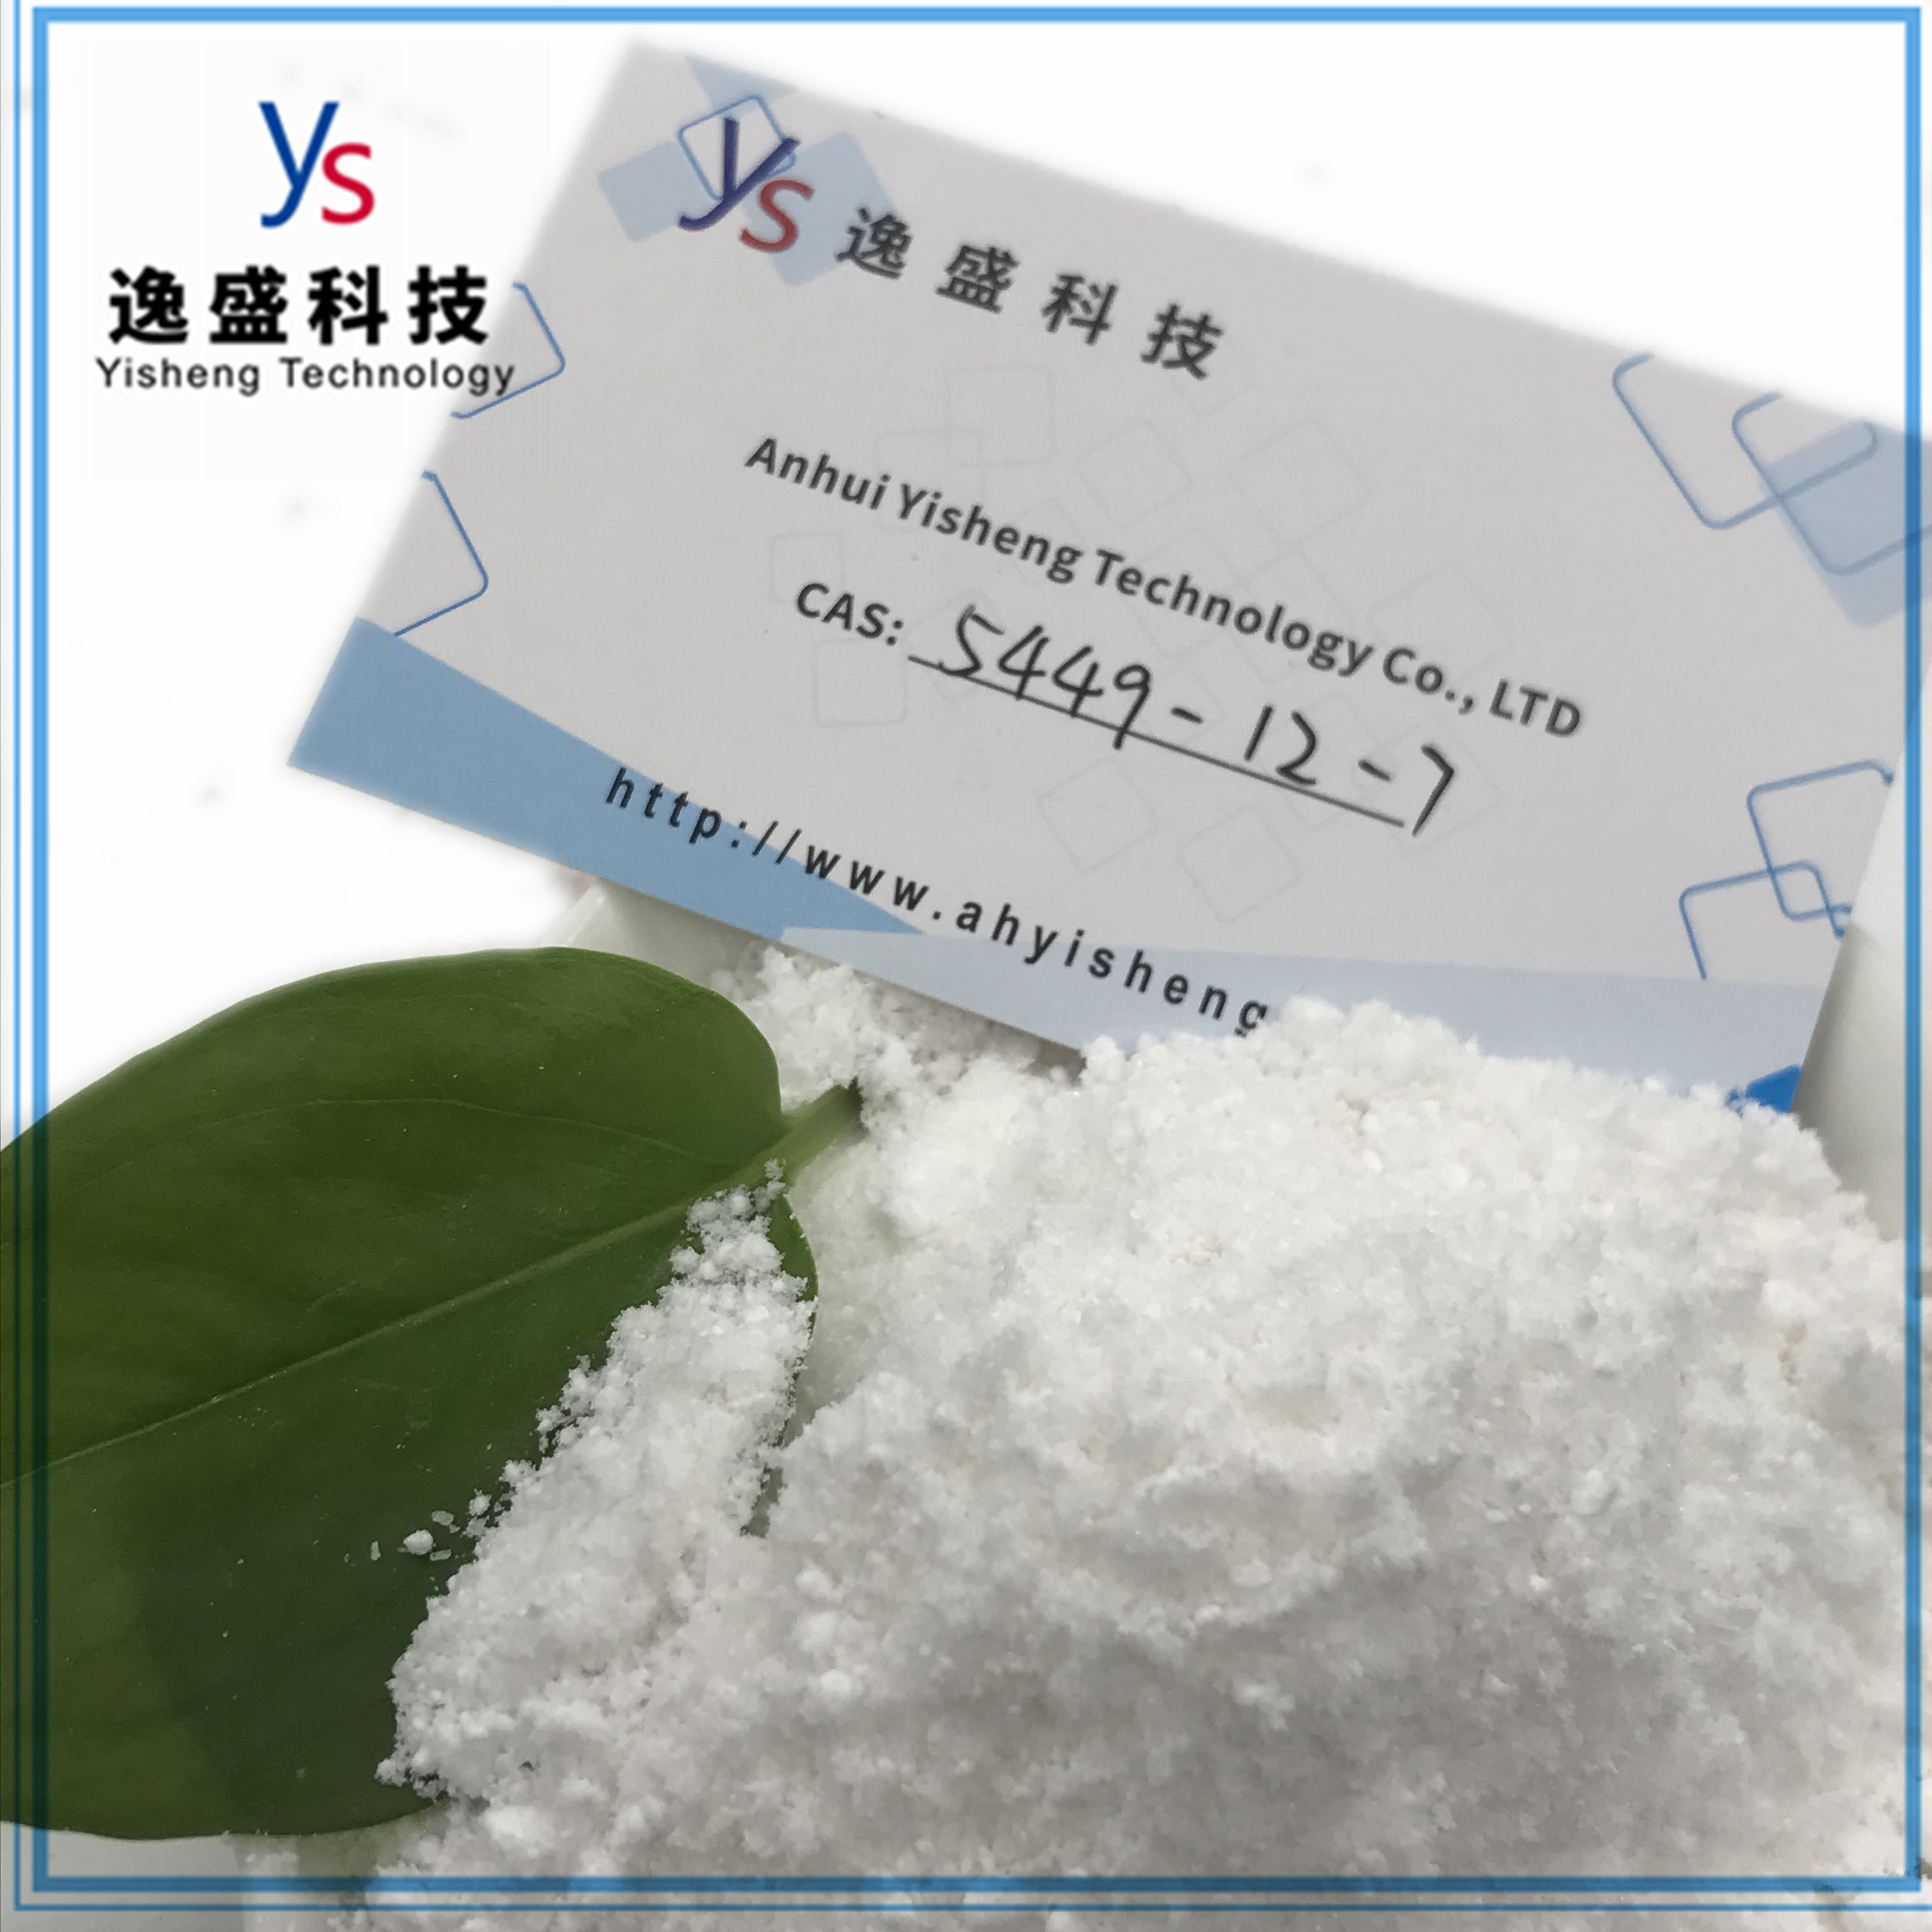 White Powder CAS 5449-12-7 China Supply Best Price 